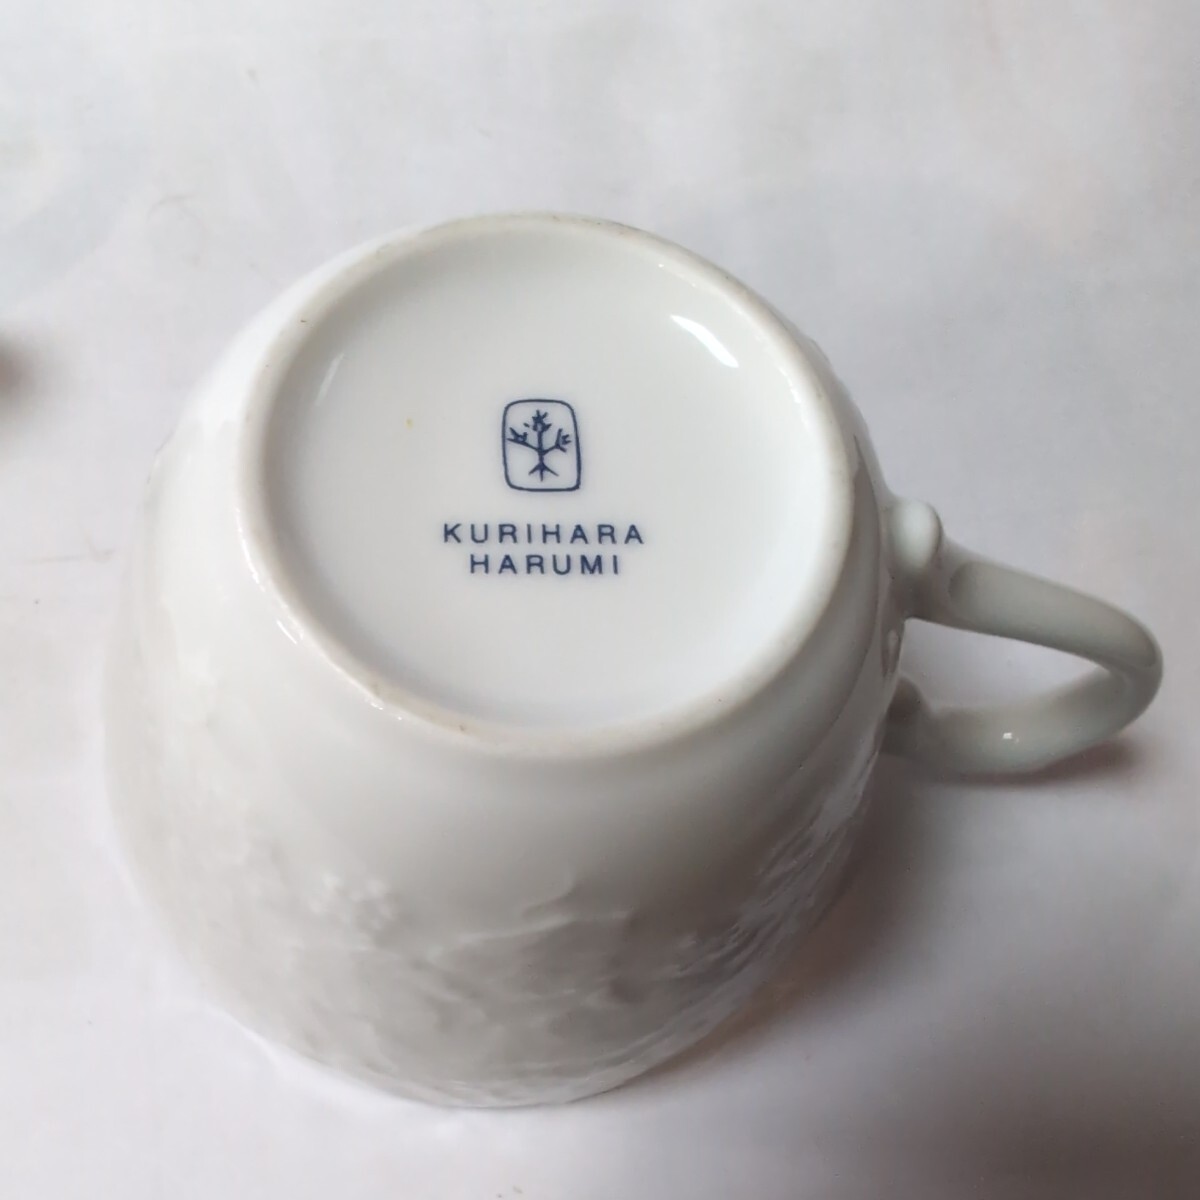 # chestnut . is ..# teapot, mug cup set # secondhand goods #